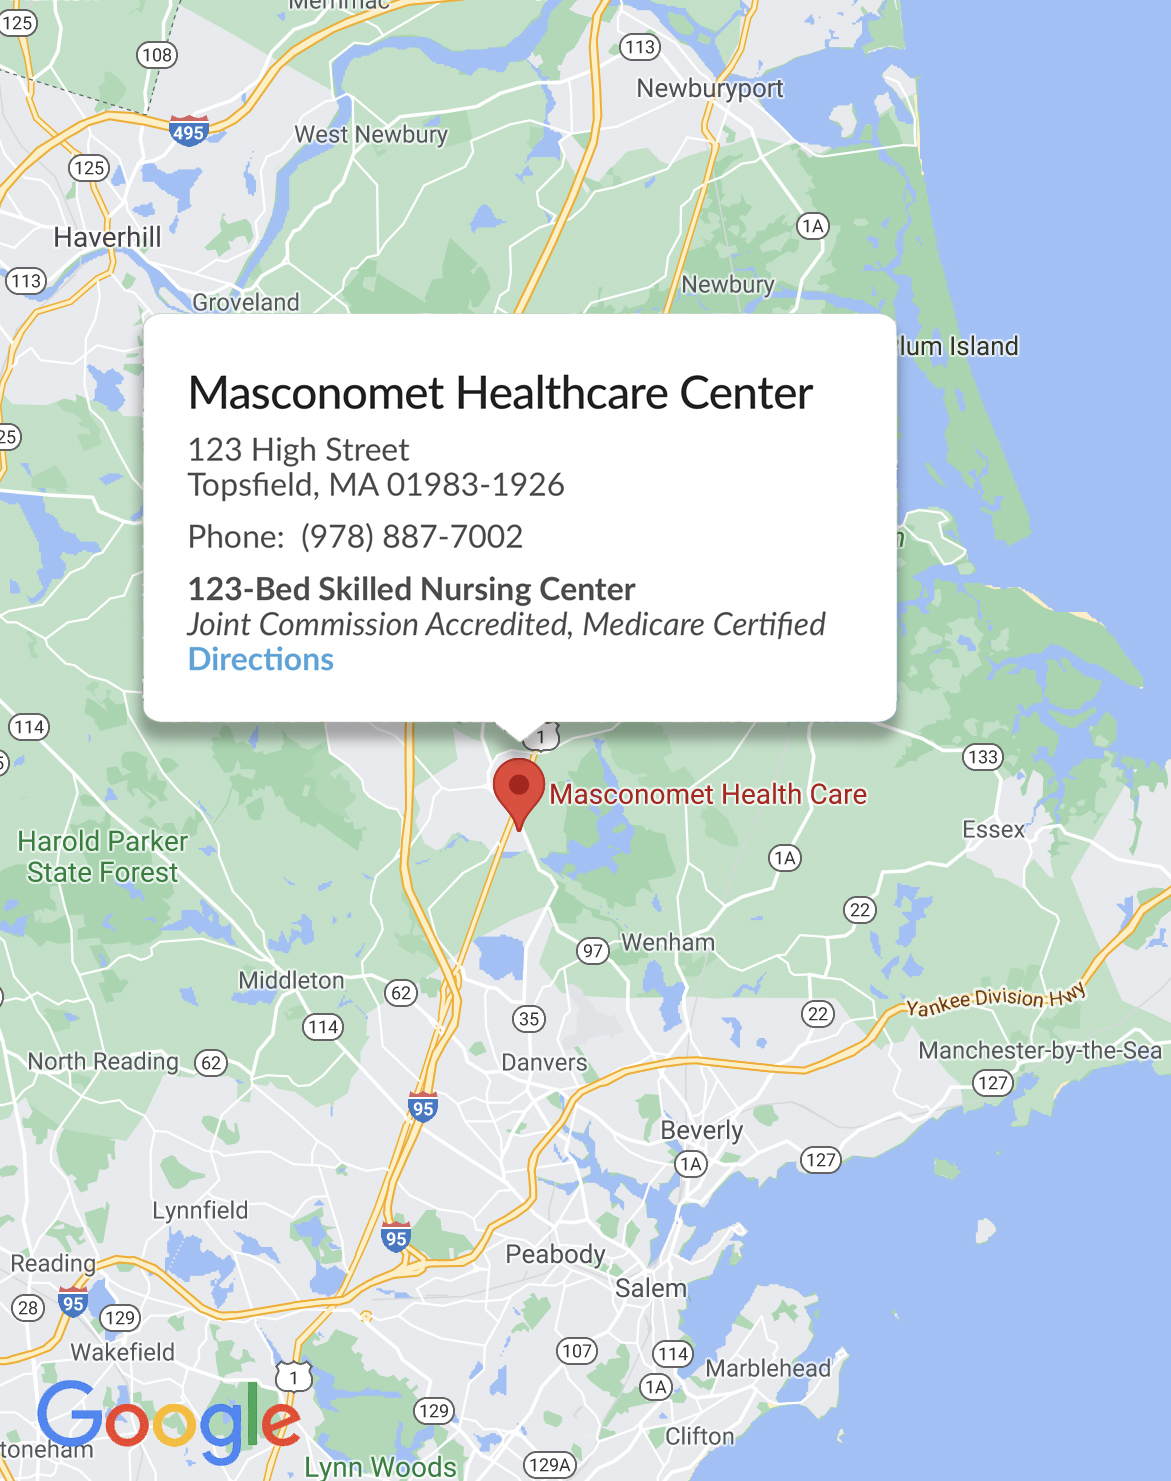 Skilled Nursing Facility, Masconomet Healthcare Center Topsfield, MA